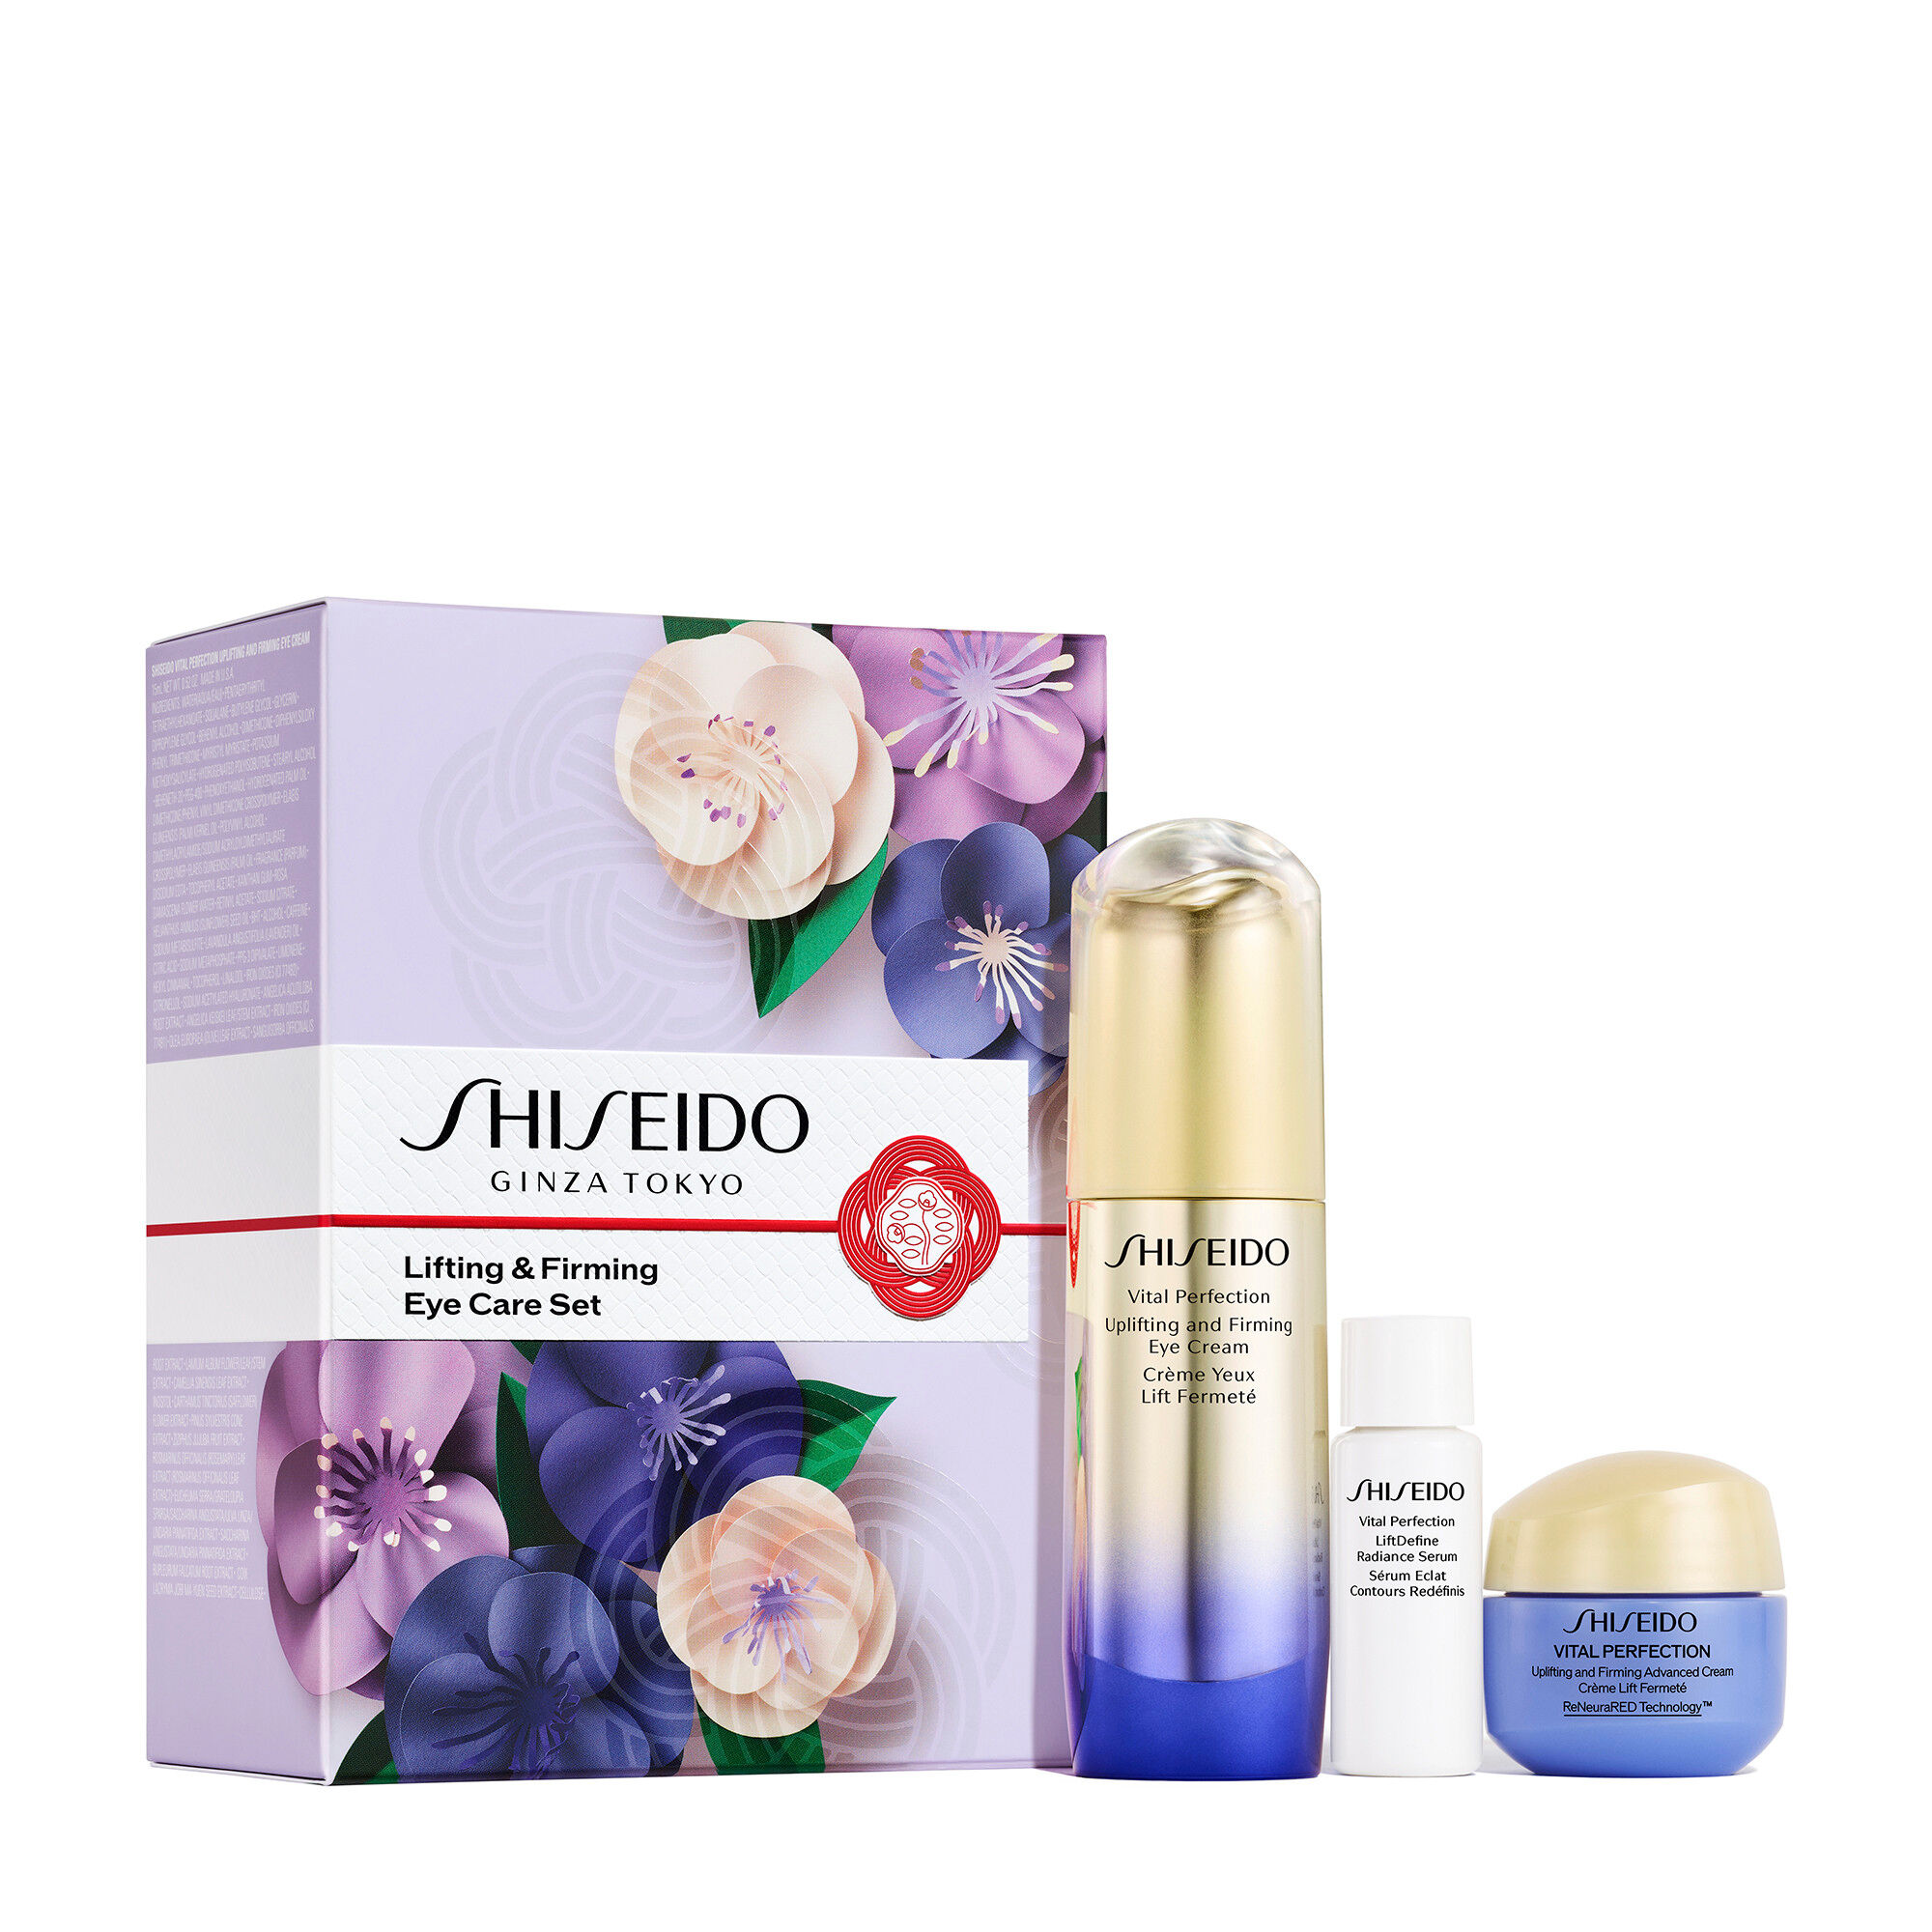 Shiseido Vital Perfection Lifting & Firming Eye Care Set ($152 Value)